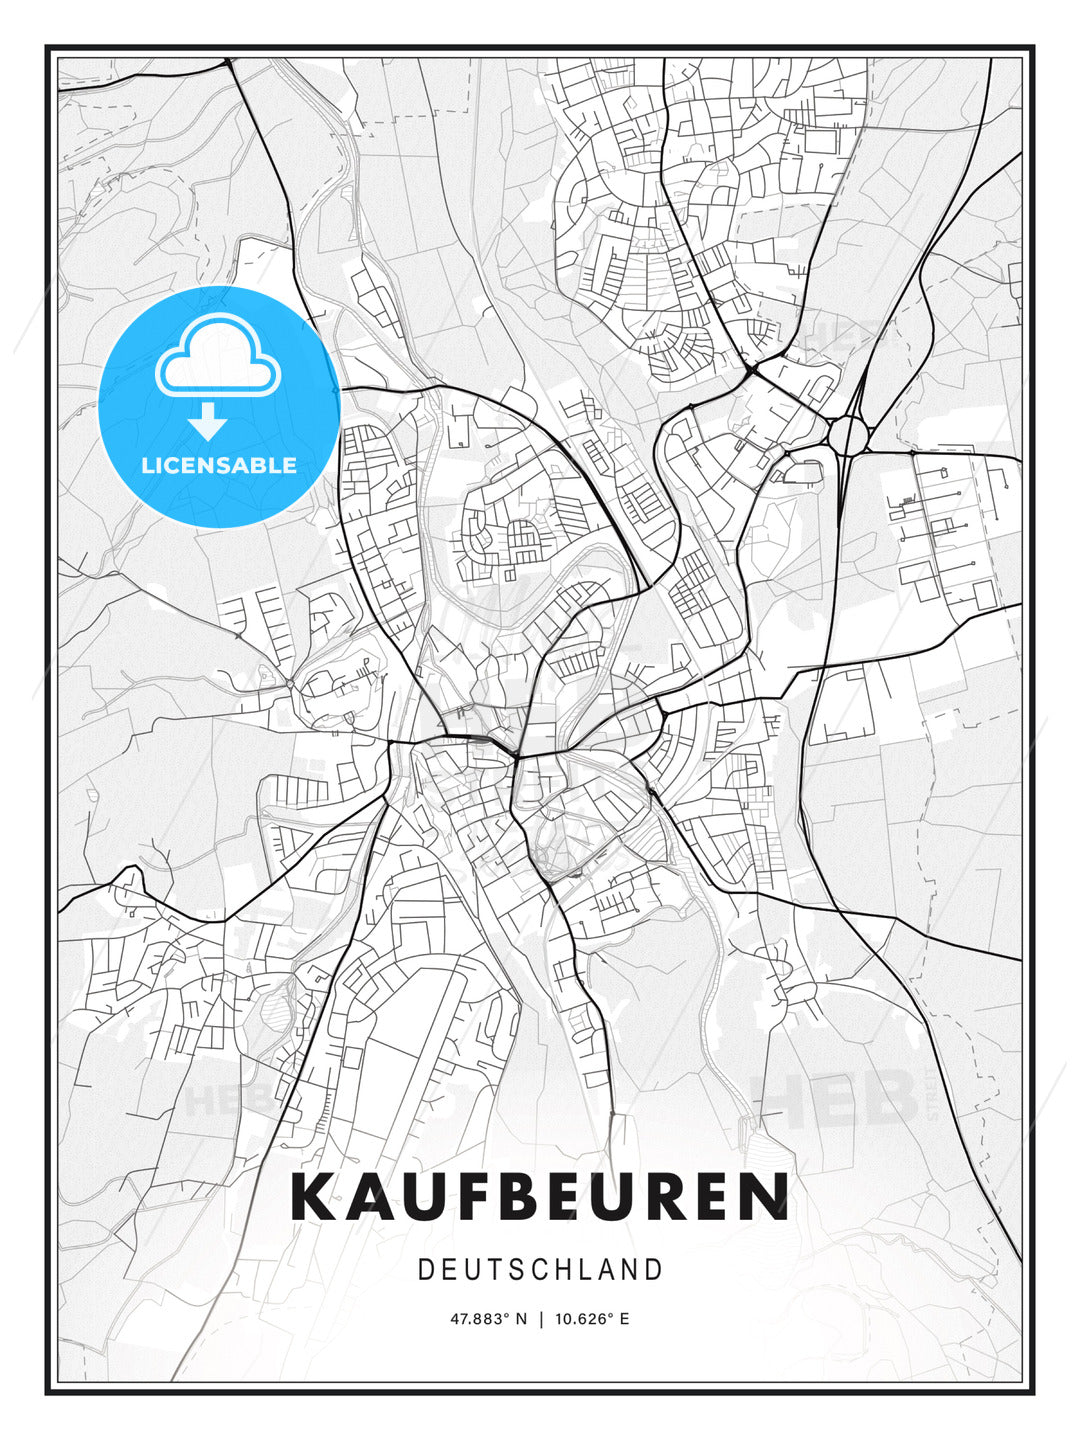 Kaufbeuren, Germany, Modern Print Template in Various Formats - HEBSTREITS Sketches